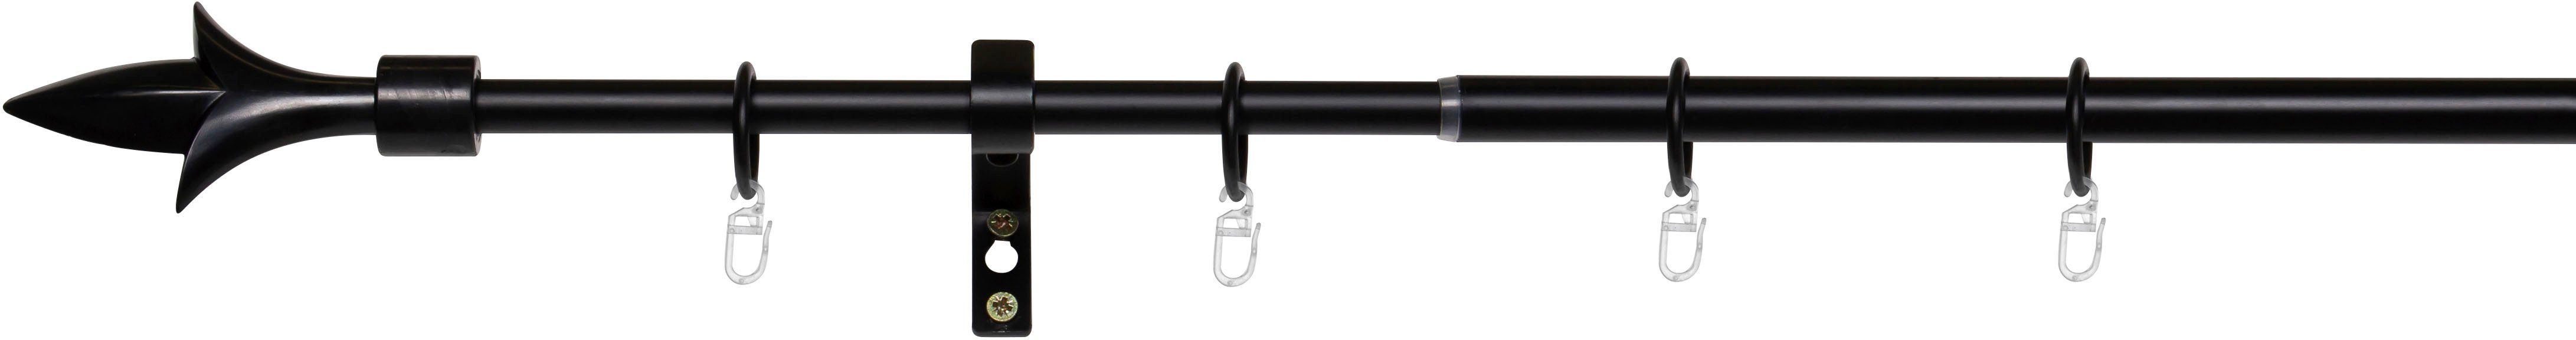 Gardinenstange lance, mydeco, Ø 16 mm, 1-läufig, ausziehbar, verschraubt,  Aluminium